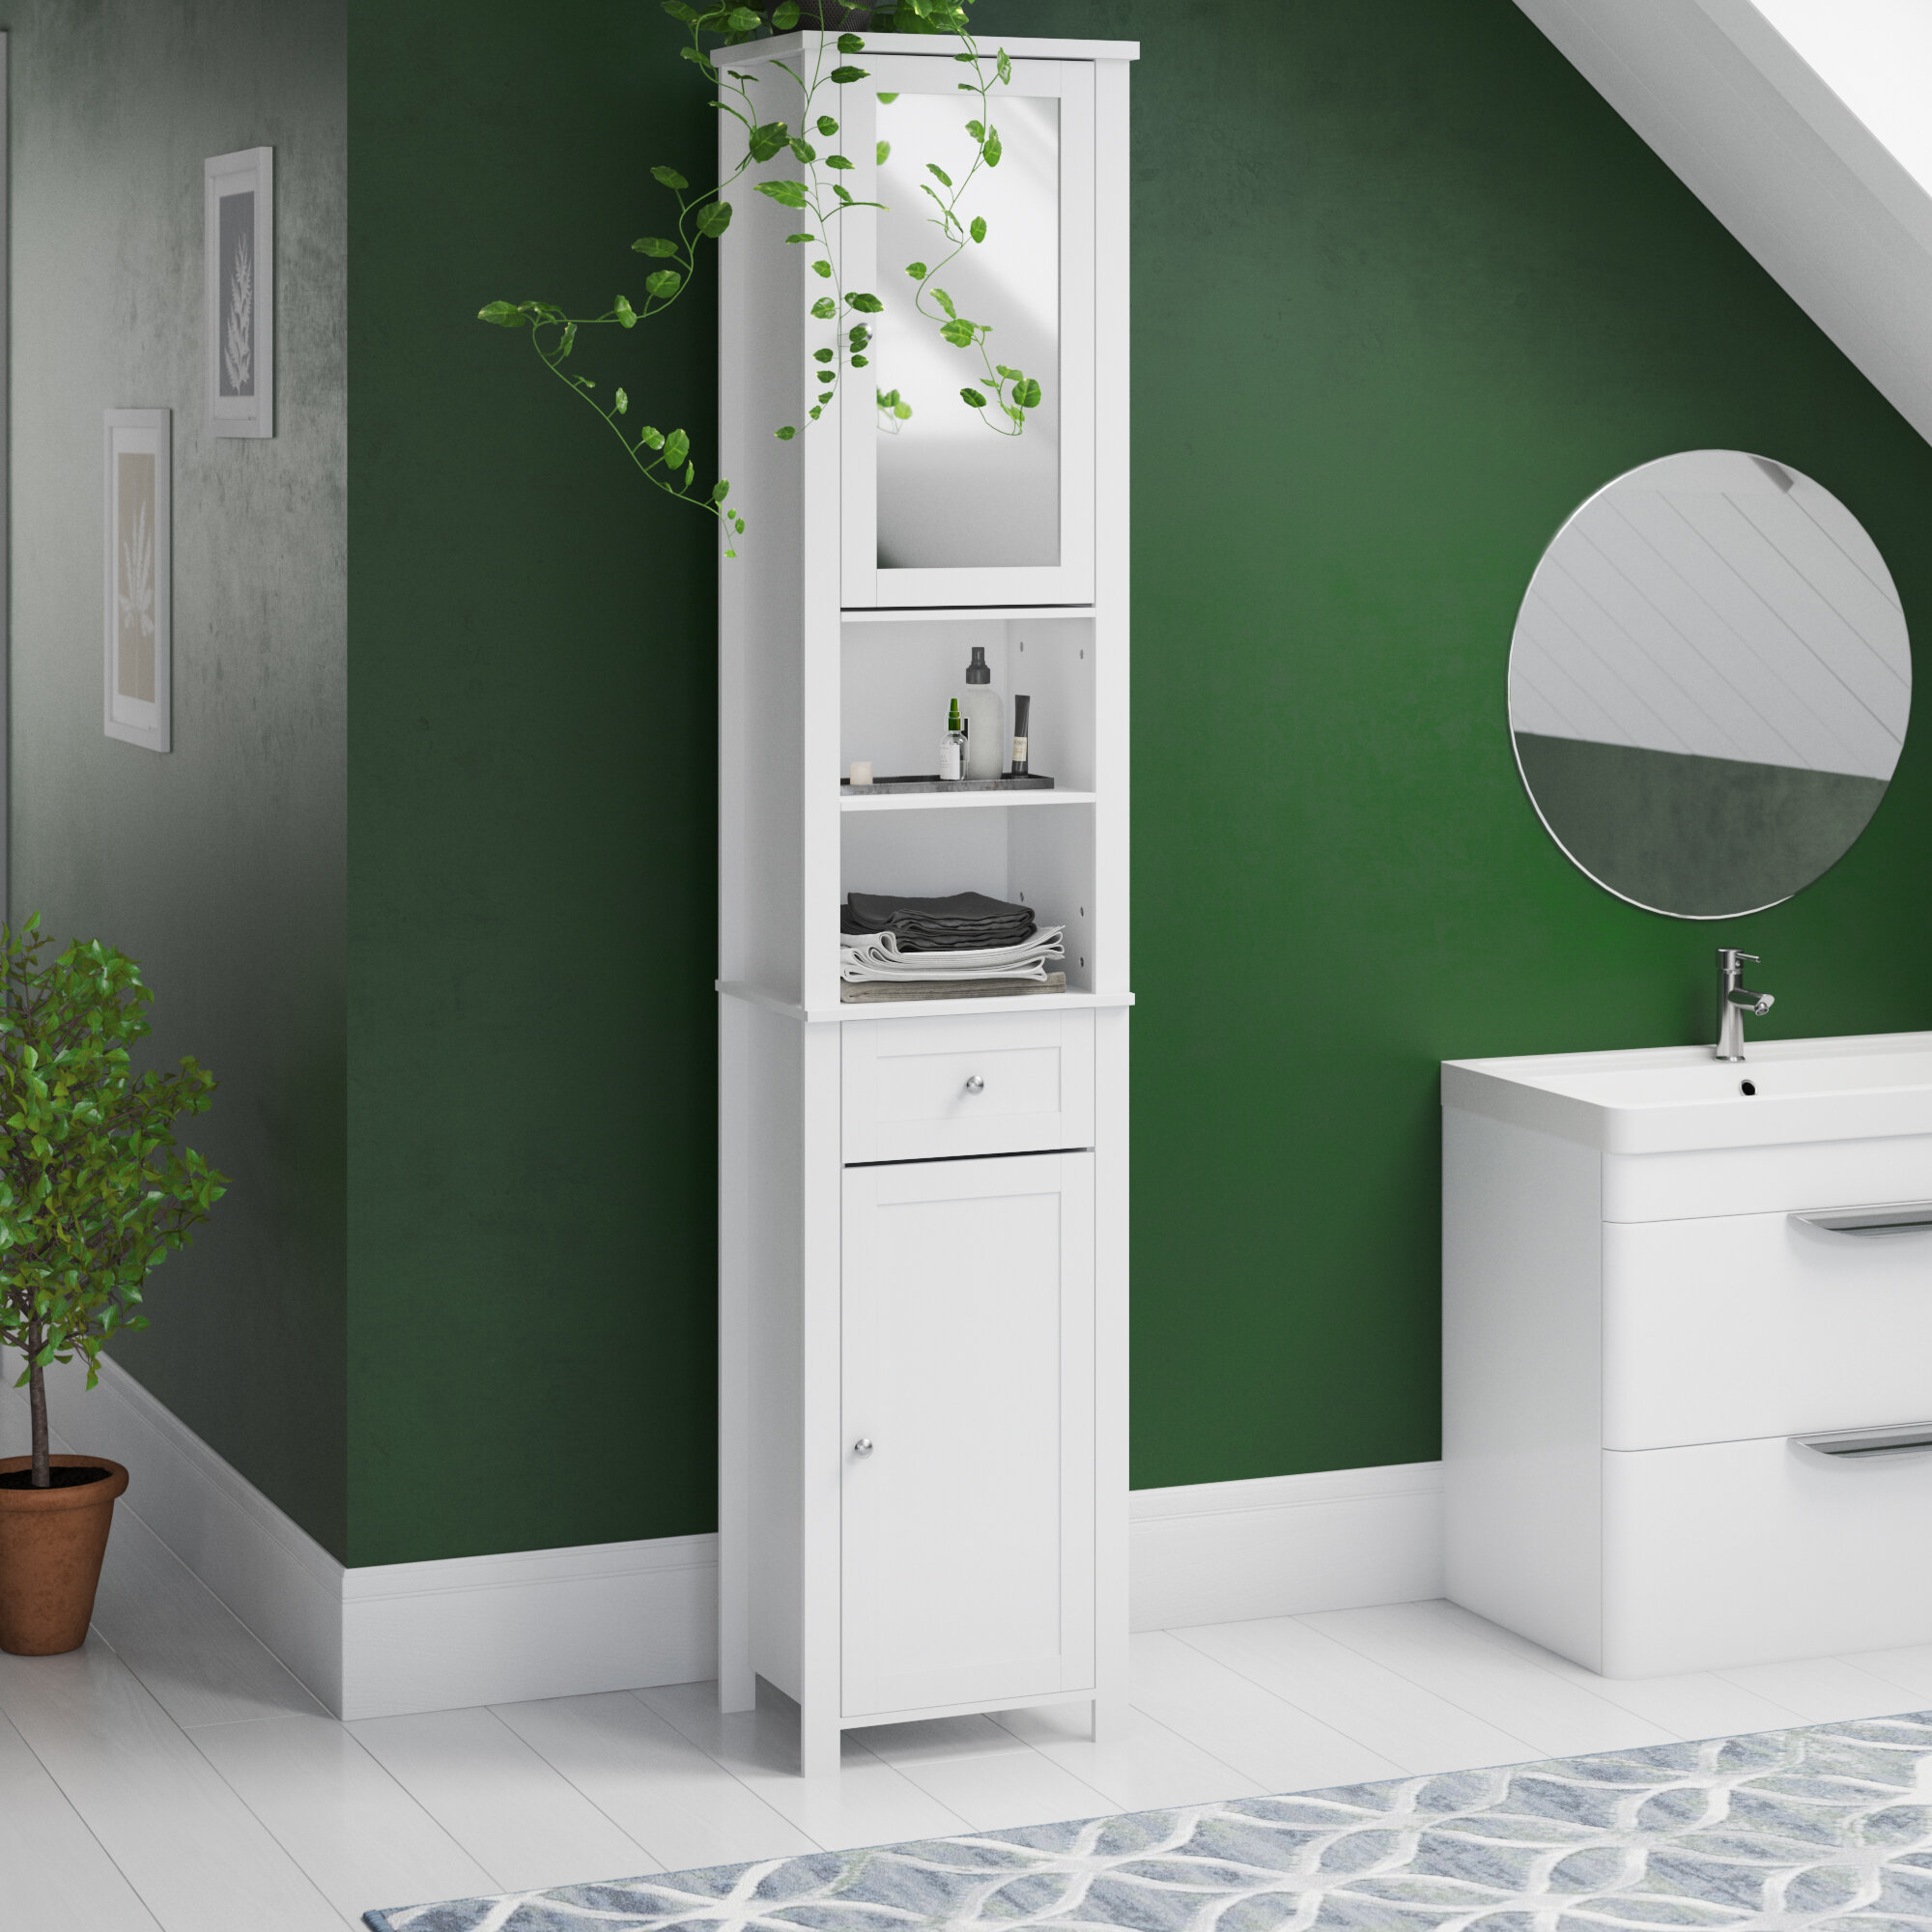 1 Door Bathroom Linen Cabinet Tower Furniture Tall Drawer Shelves White Bath New